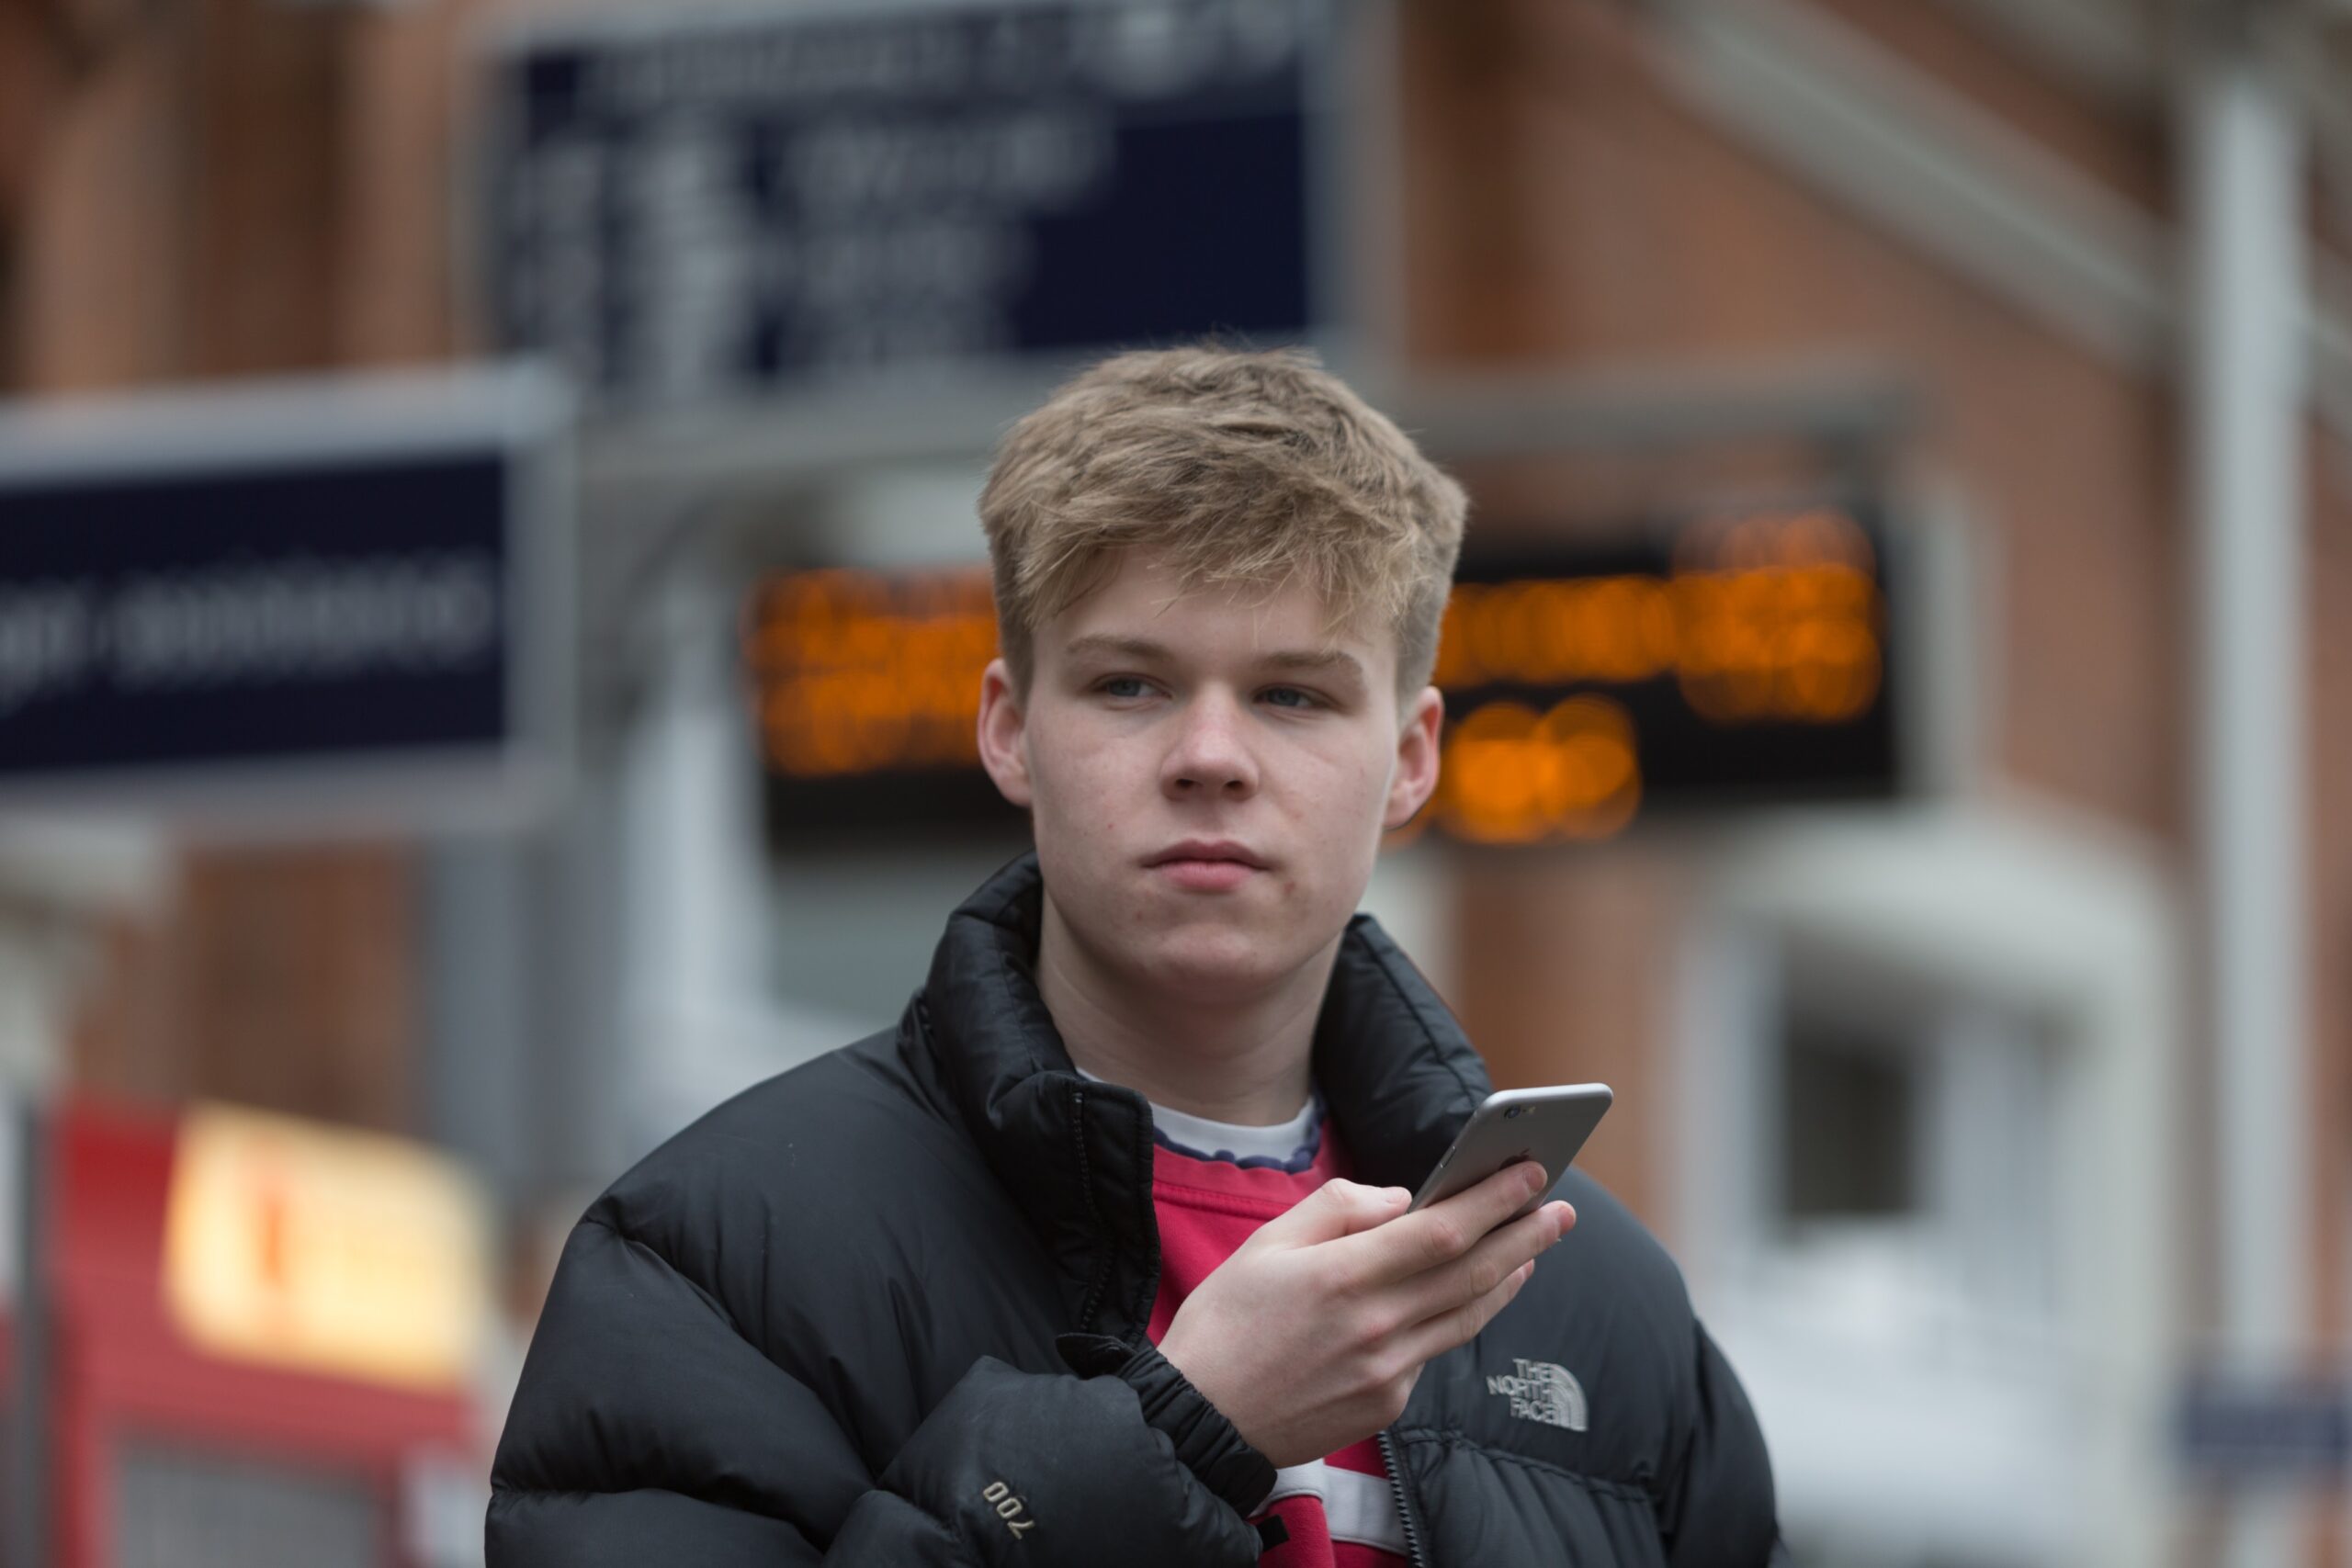 Passenger looking at mobile phone at train station.